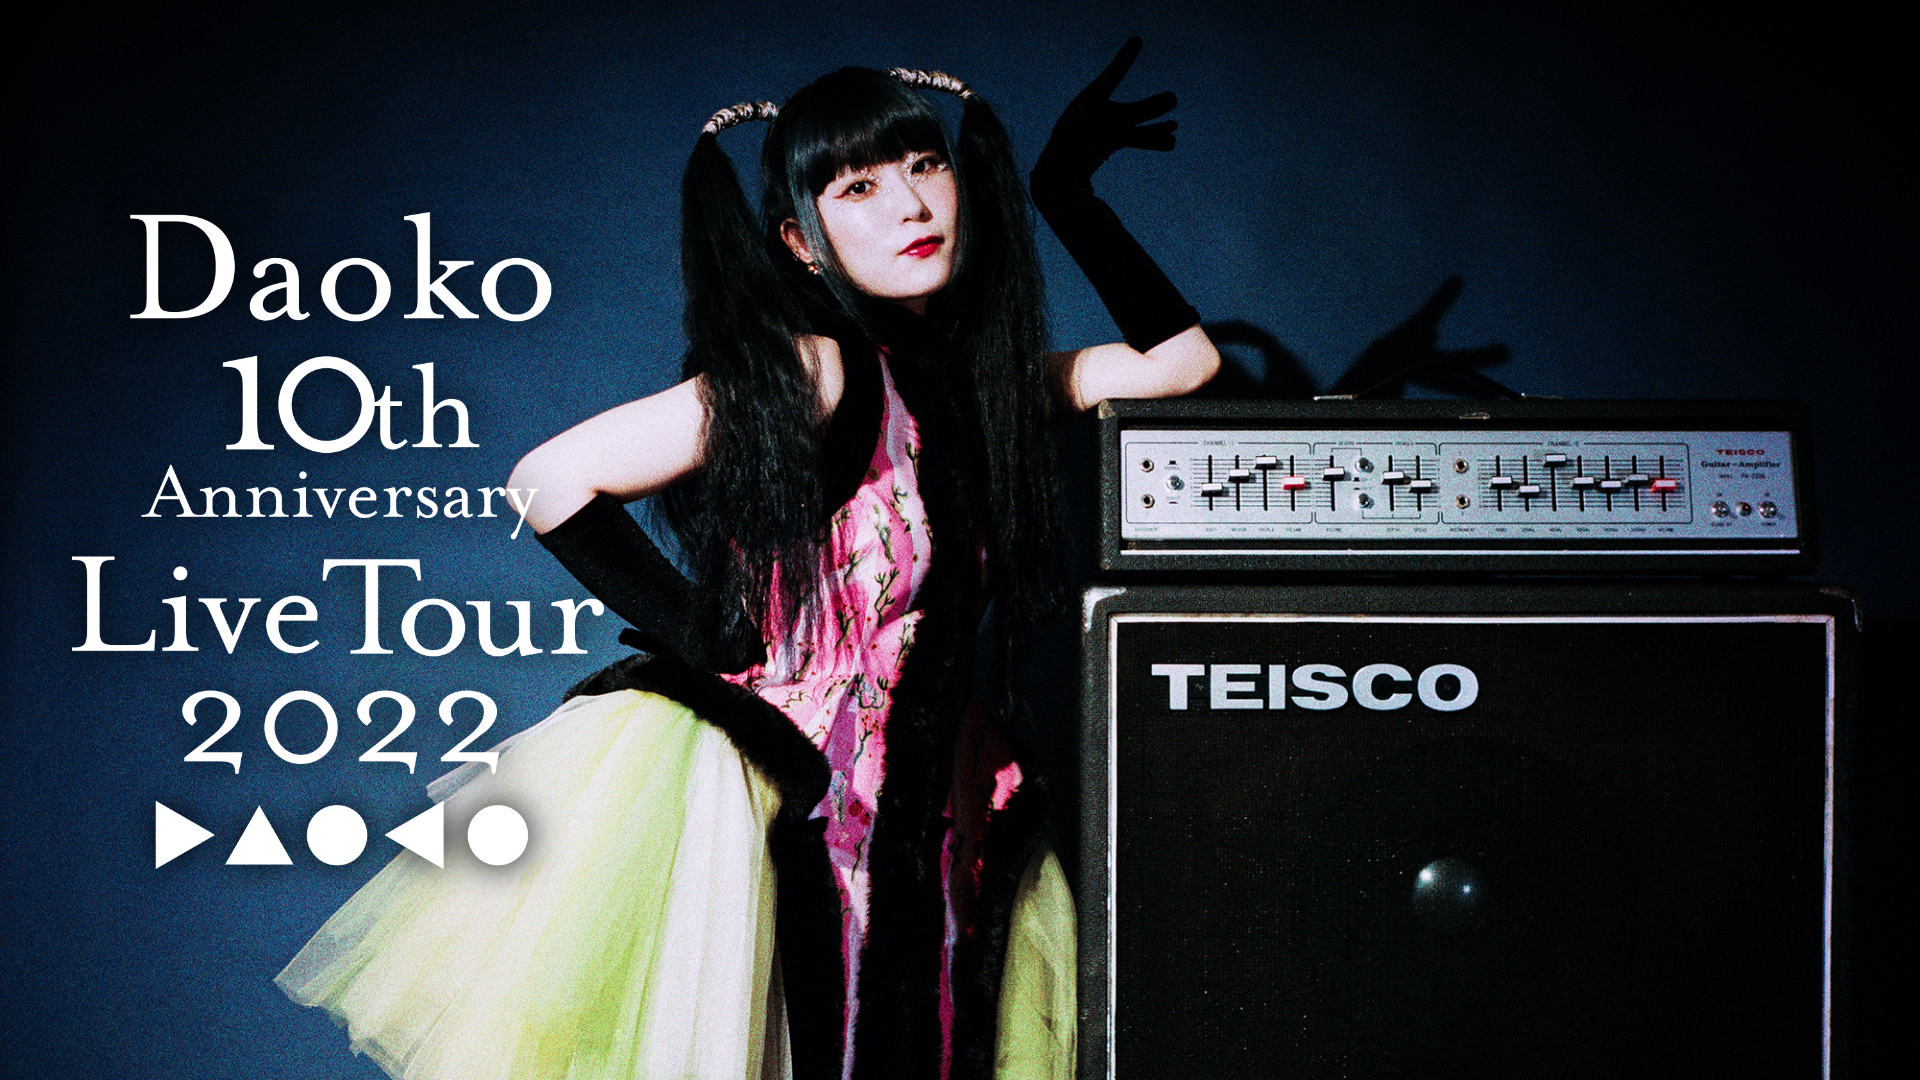 Daoko活動10周年！約3年ぶりとなるワンマンLIVEツアー『Daoko 10th Anniversary Live Tour  2022』最終公演を、U-NEXTにて見放題で独占ライブ配信決定！ | U-NEXT corporate